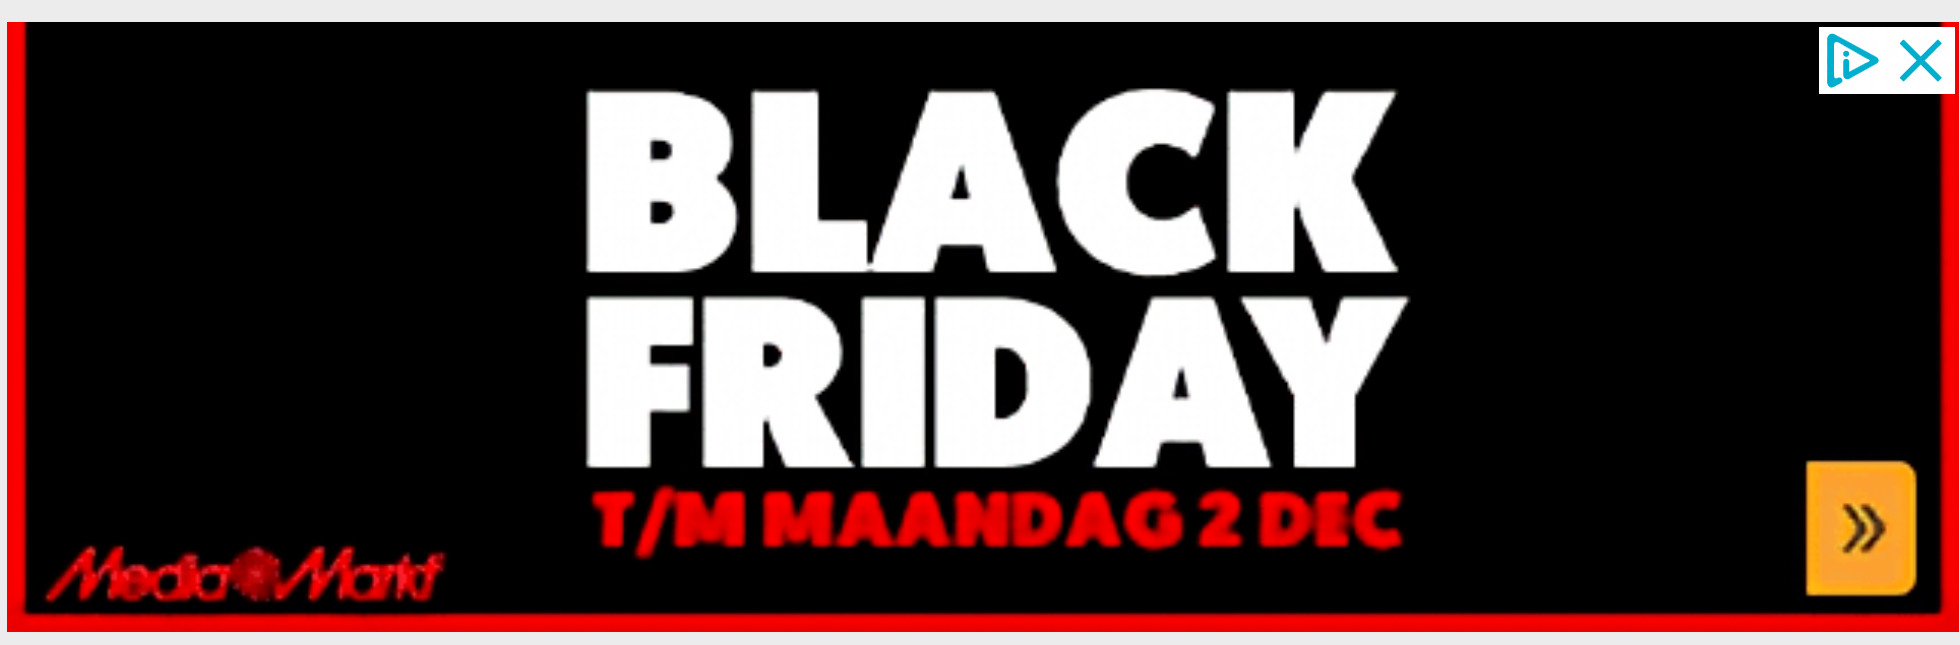 Aanbod Terughoudendheid Vervreemden File:Media Markt Black Friday banner advertisement (Google Ads) 2019.png -  Wikimedia Commons